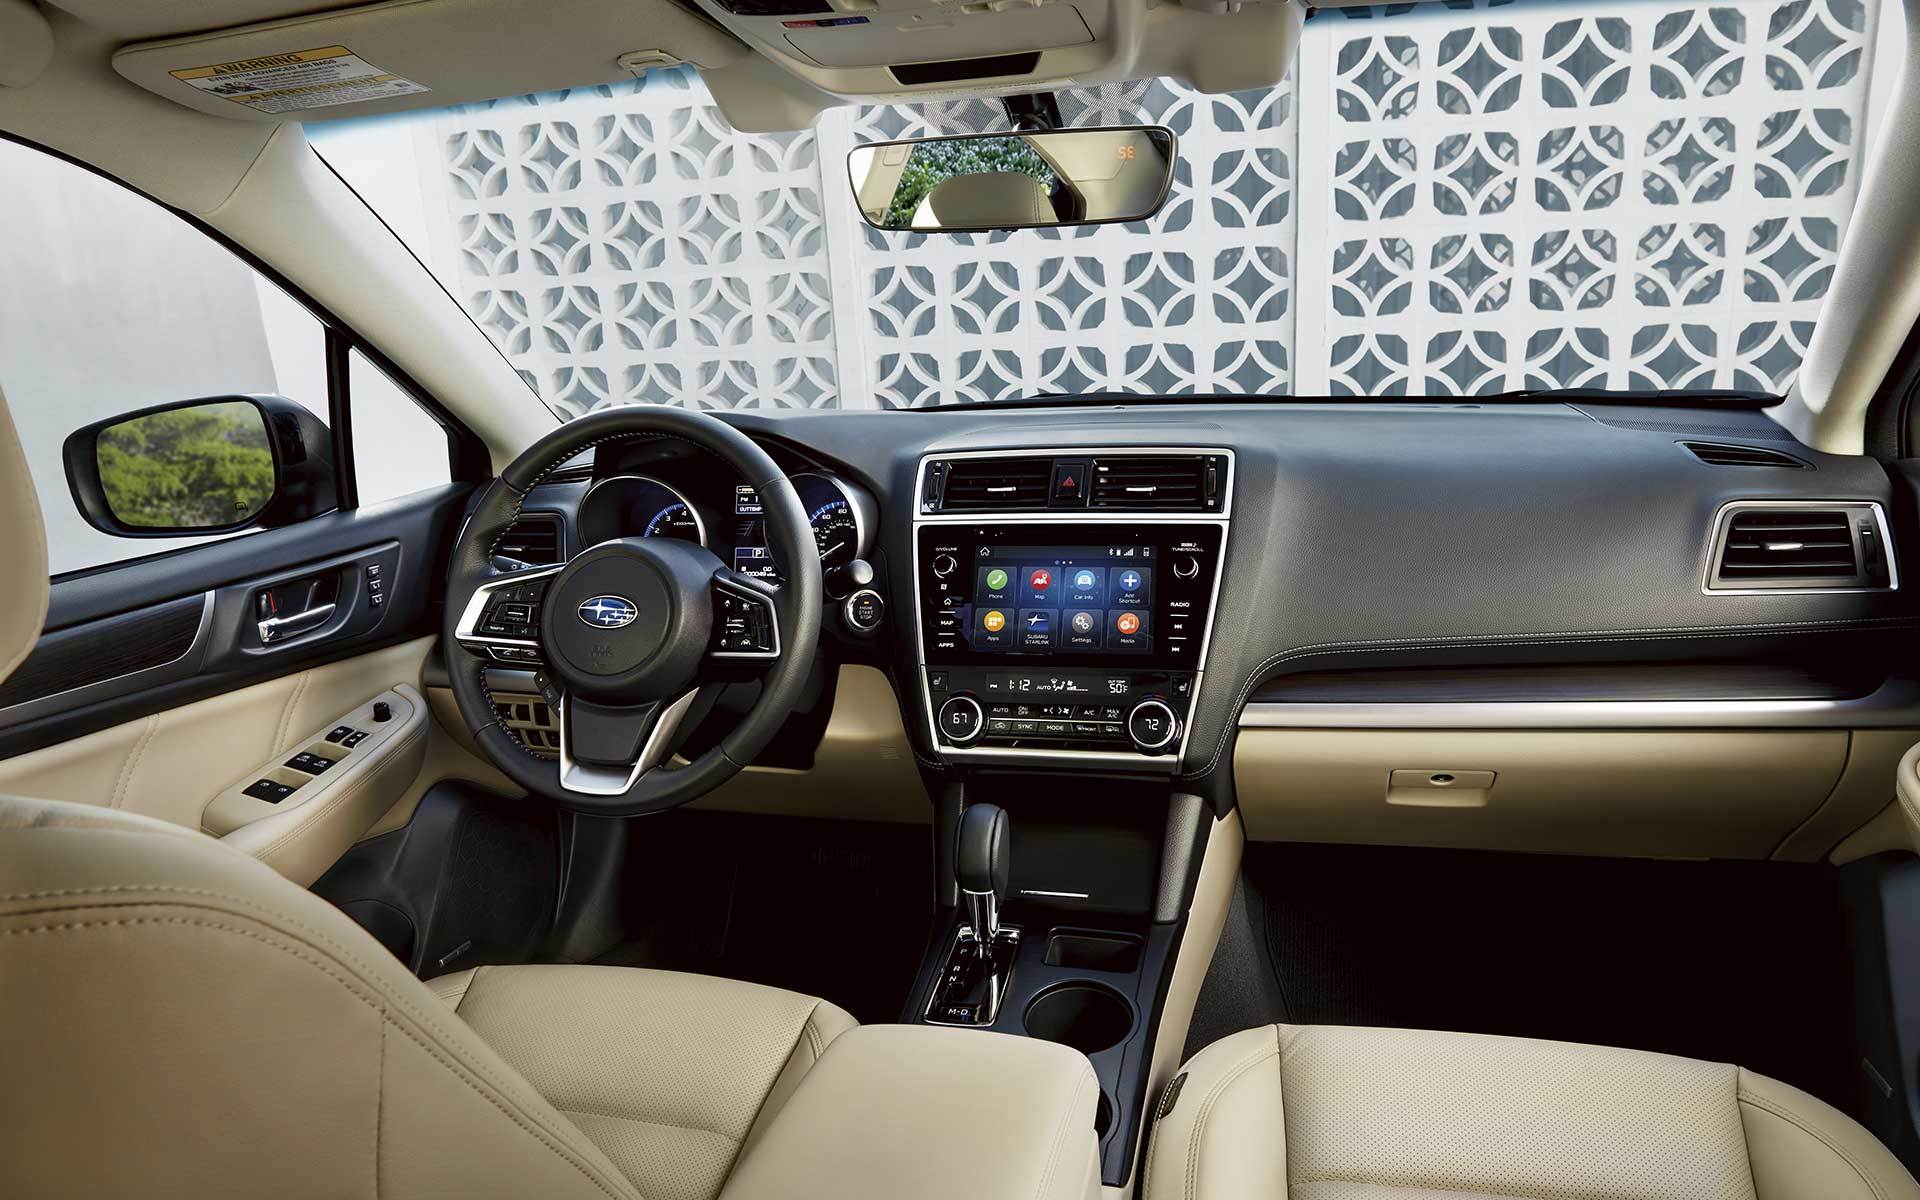 2019 Subaru Legacy Adds EyeSight & More as Standard Features